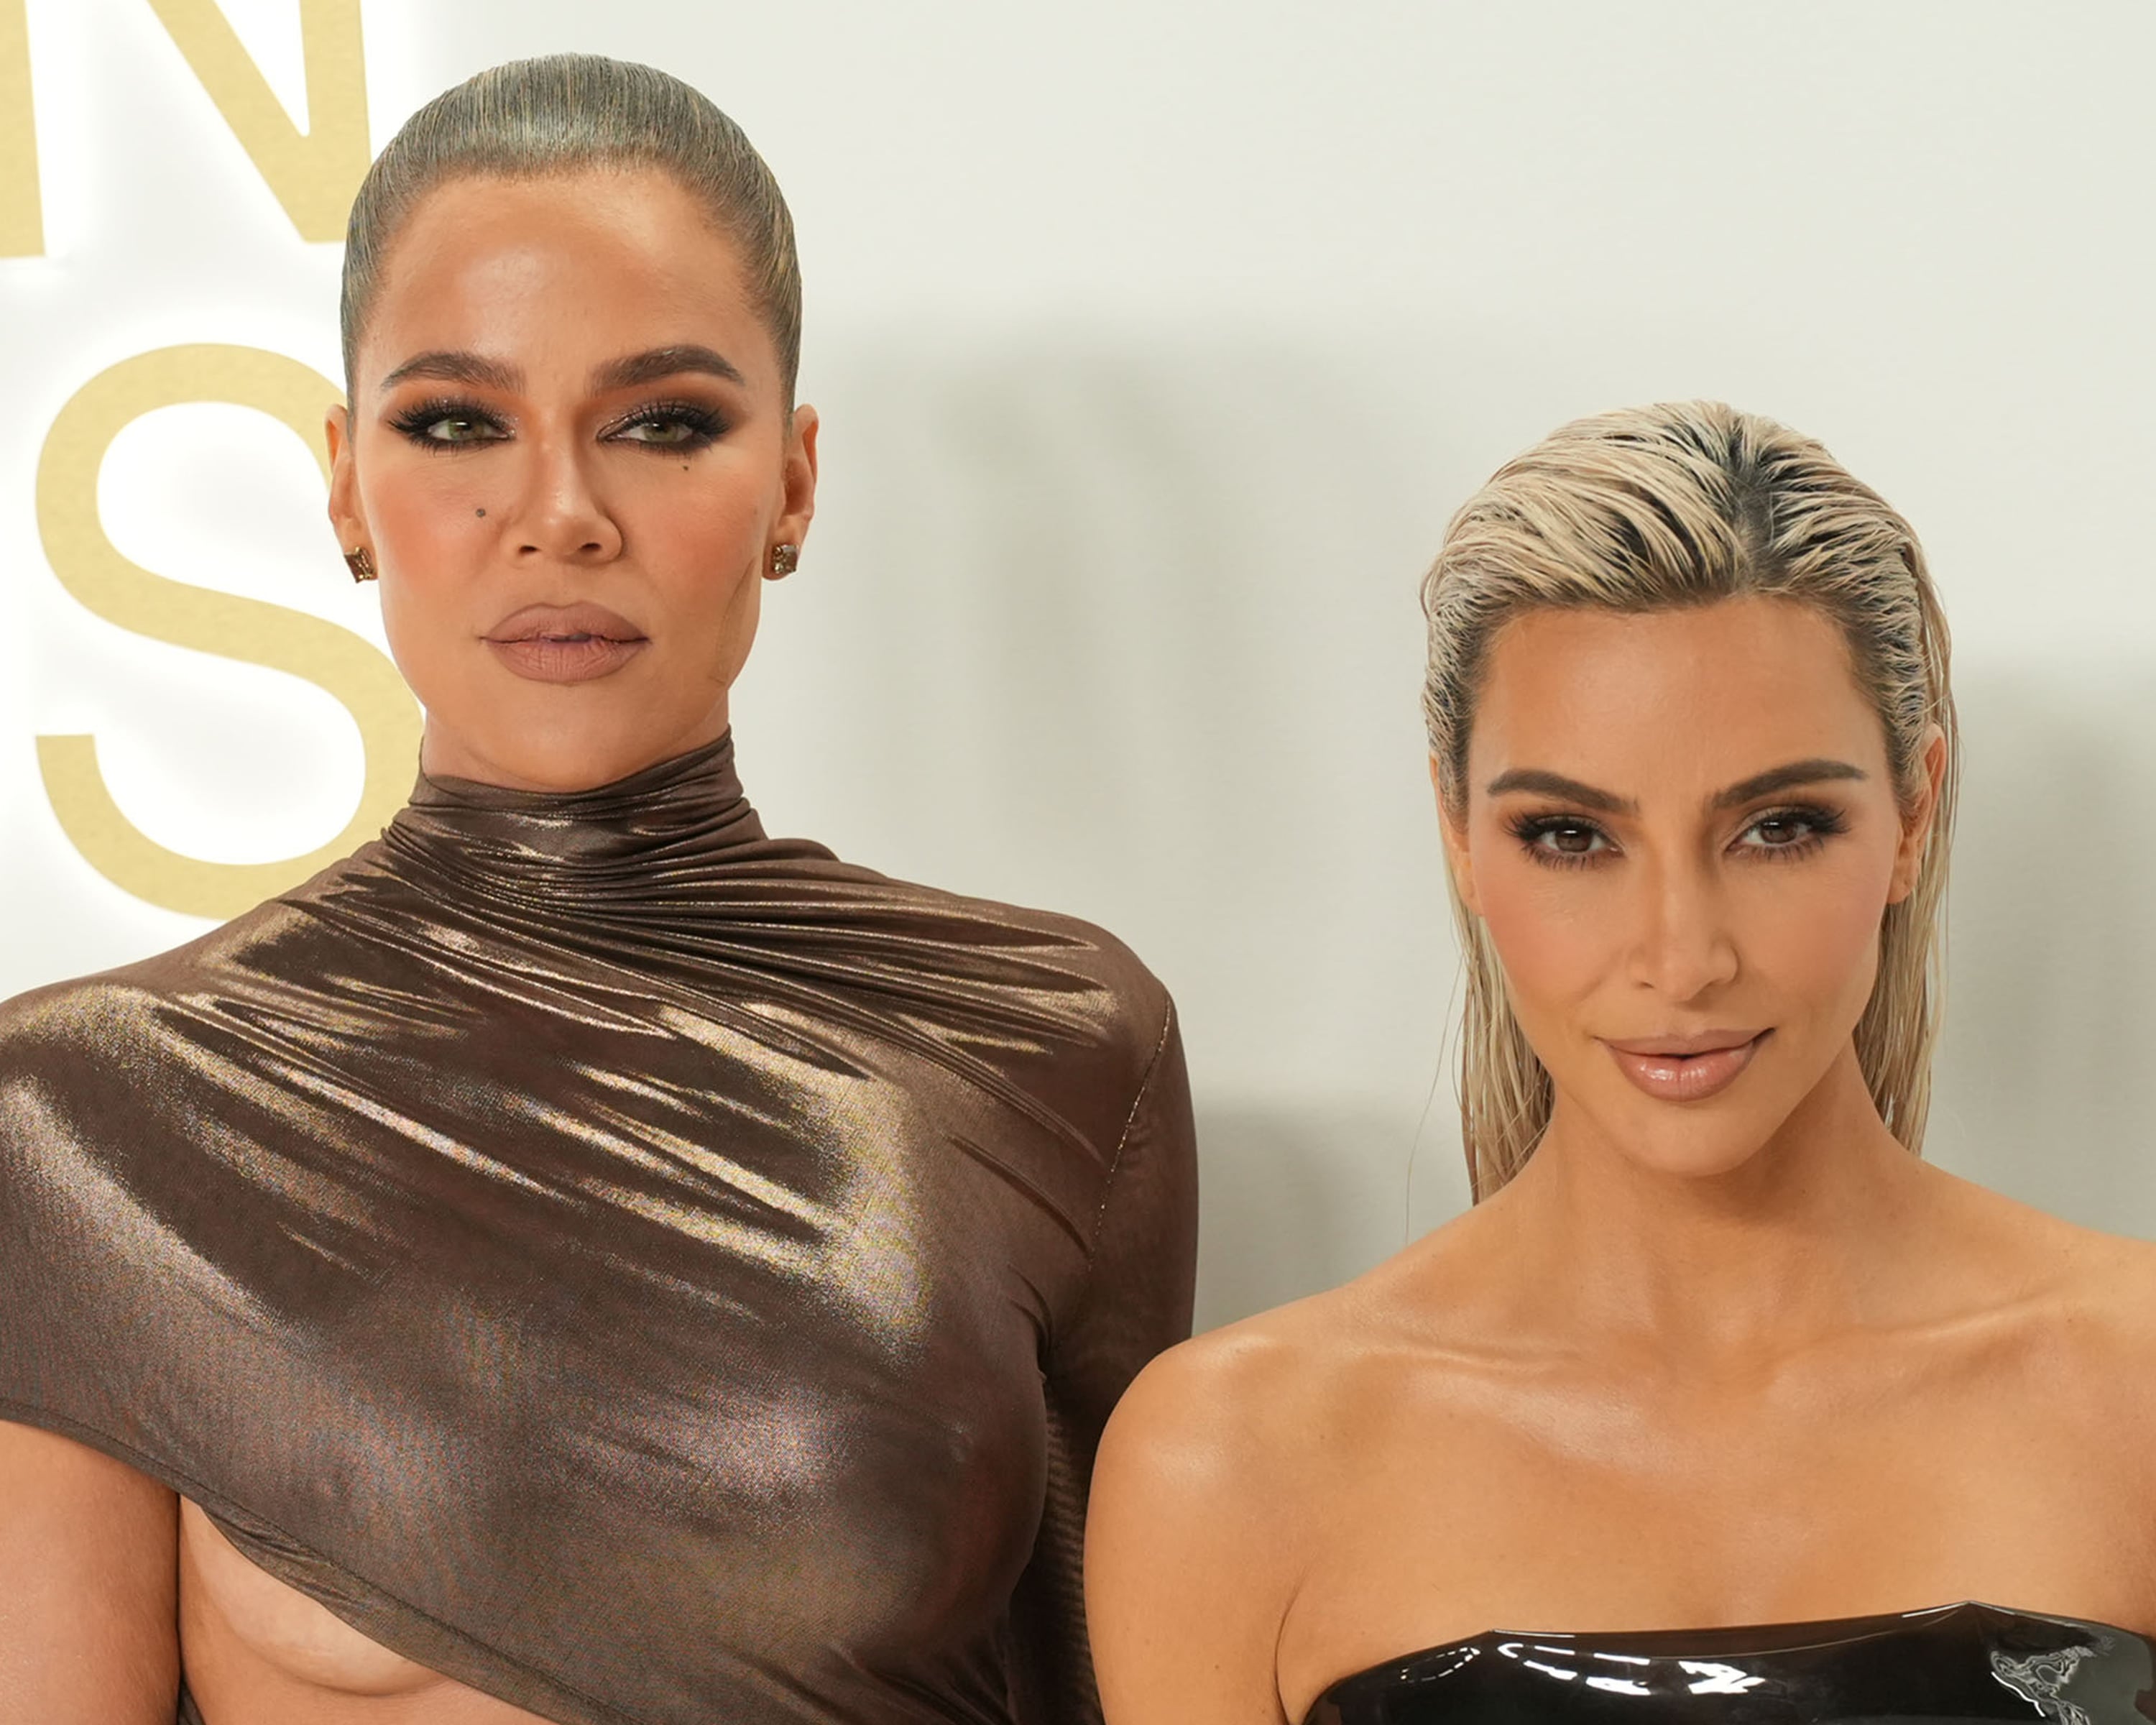 Kim Kardashian Shares Photos From World of Barbie Visit